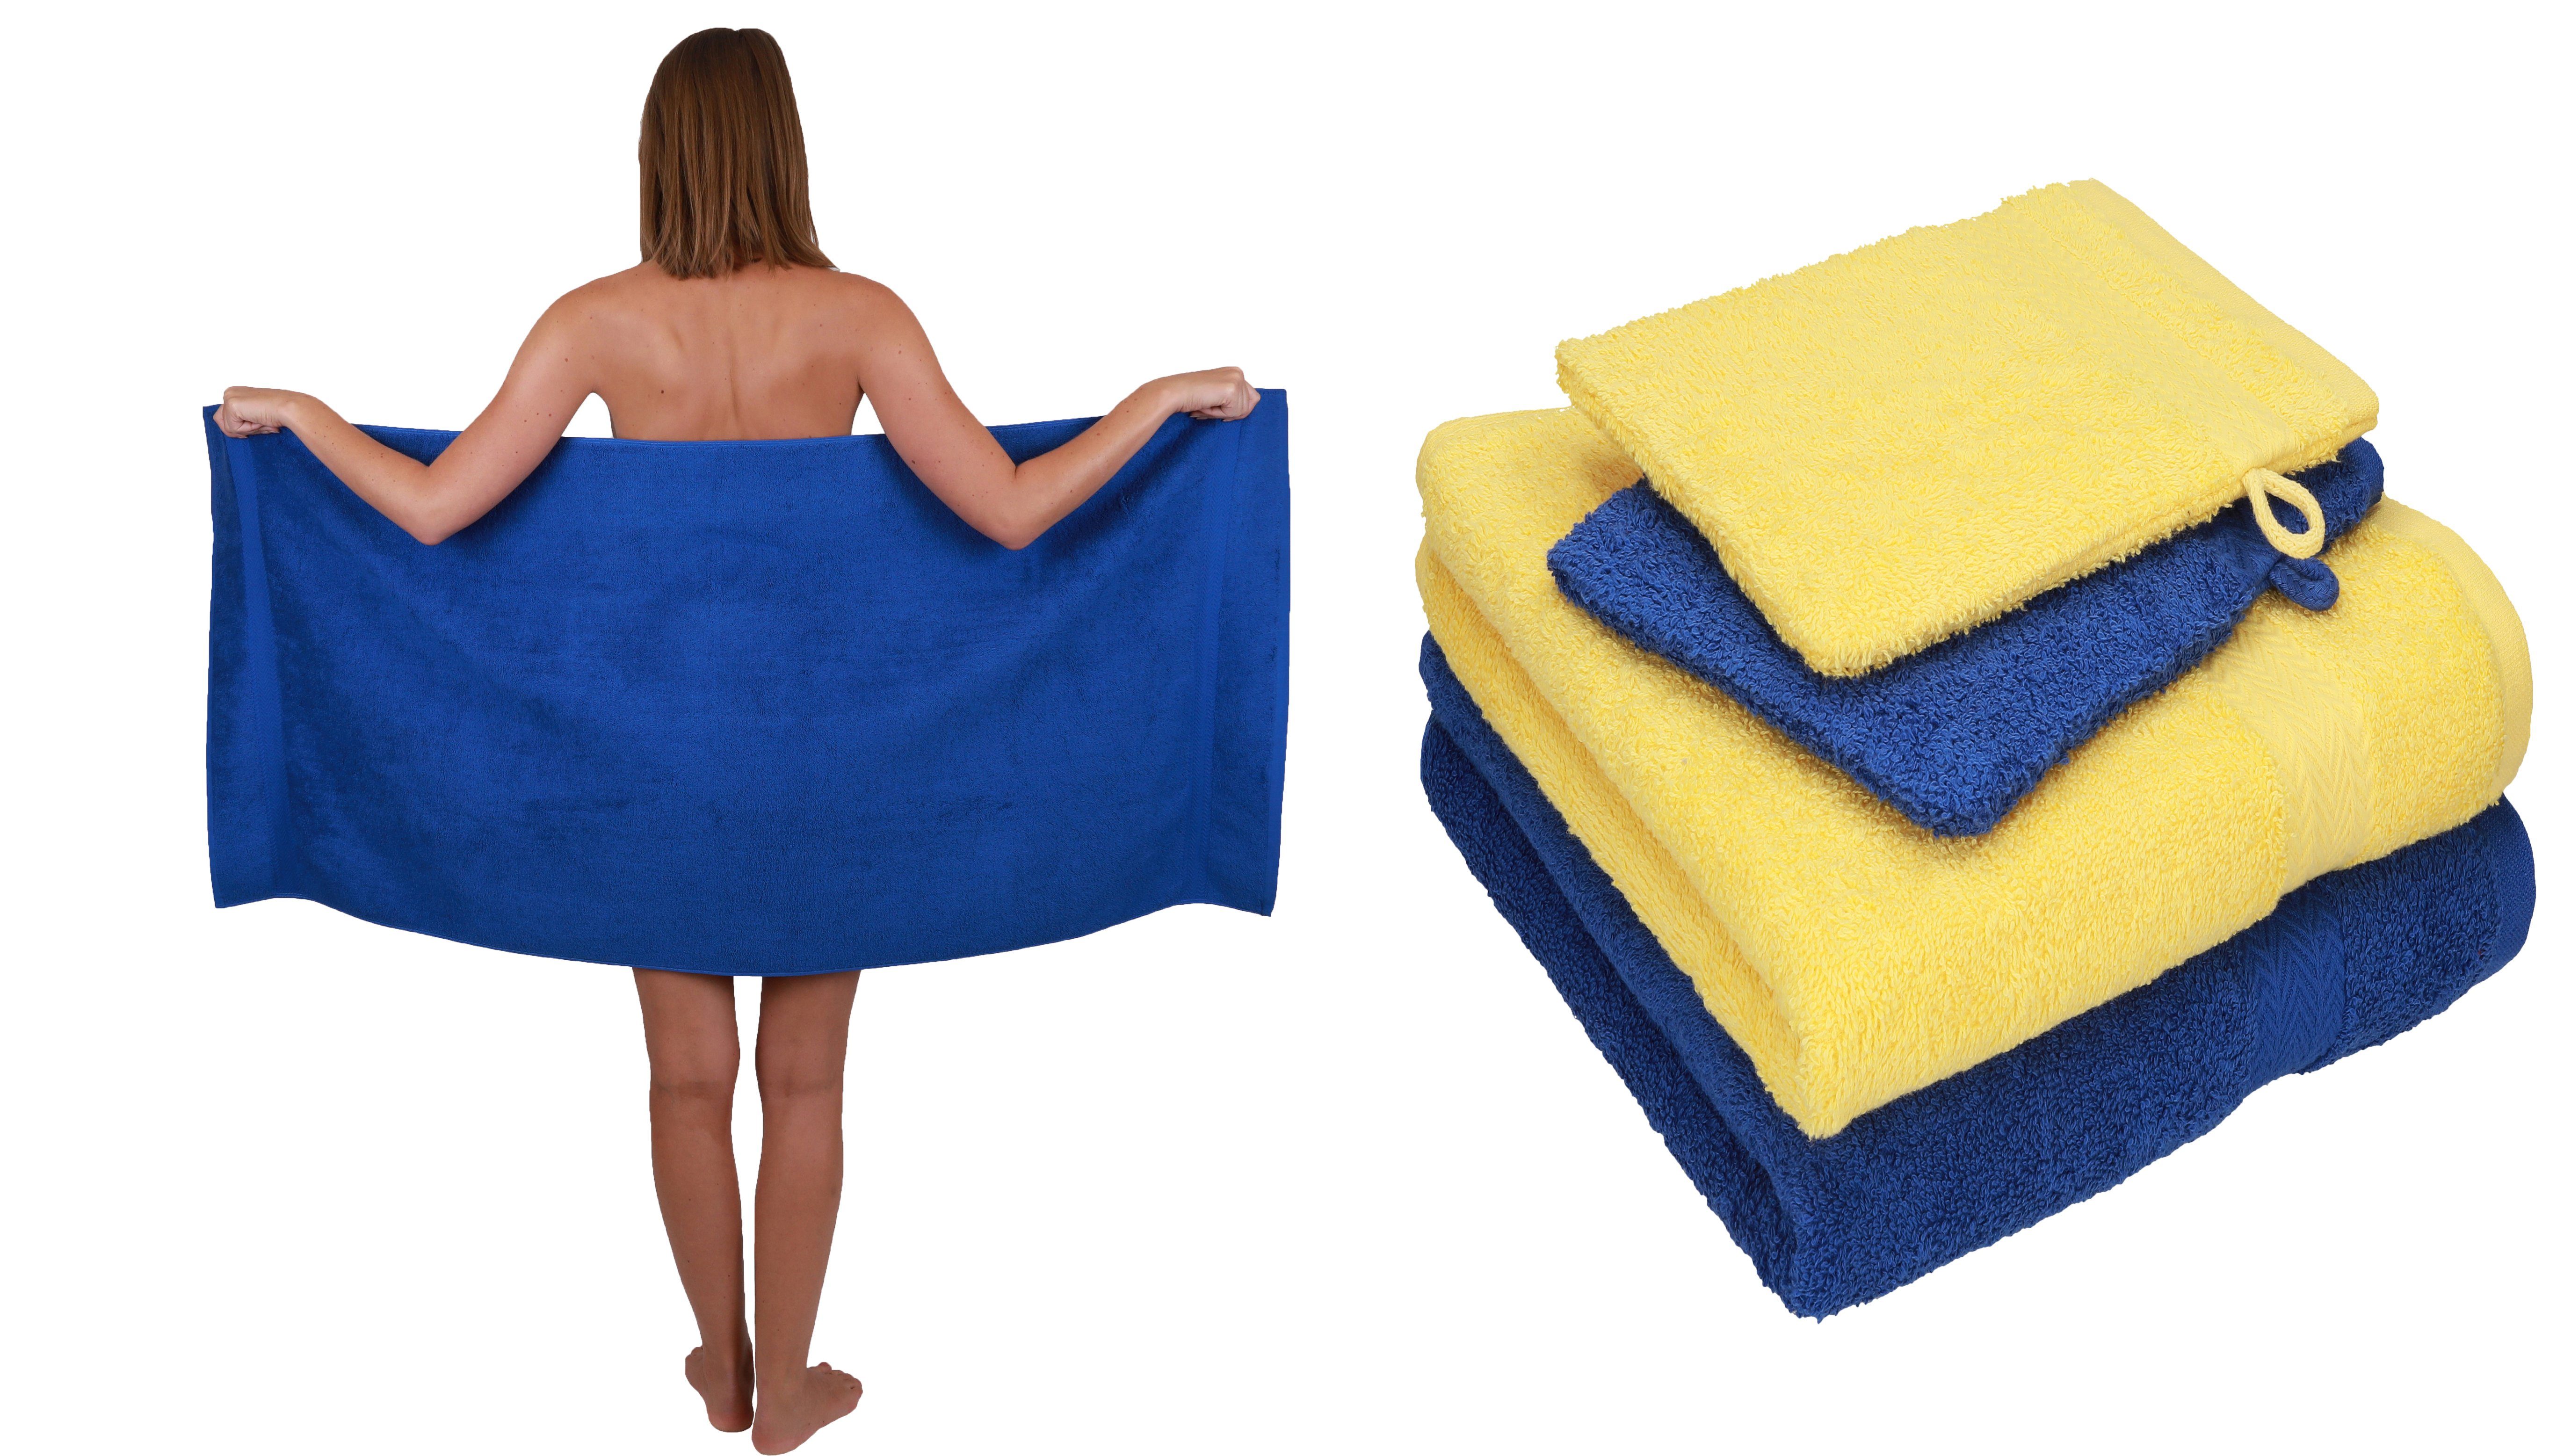 Betz Handtuch Set 5 TLG. Handtuch Set Single Pack 100% Baumwolle 1 Duschtuch 2 Handtücher 2 Waschhandschuhe, 100% Baumwolle royalblau-gelb